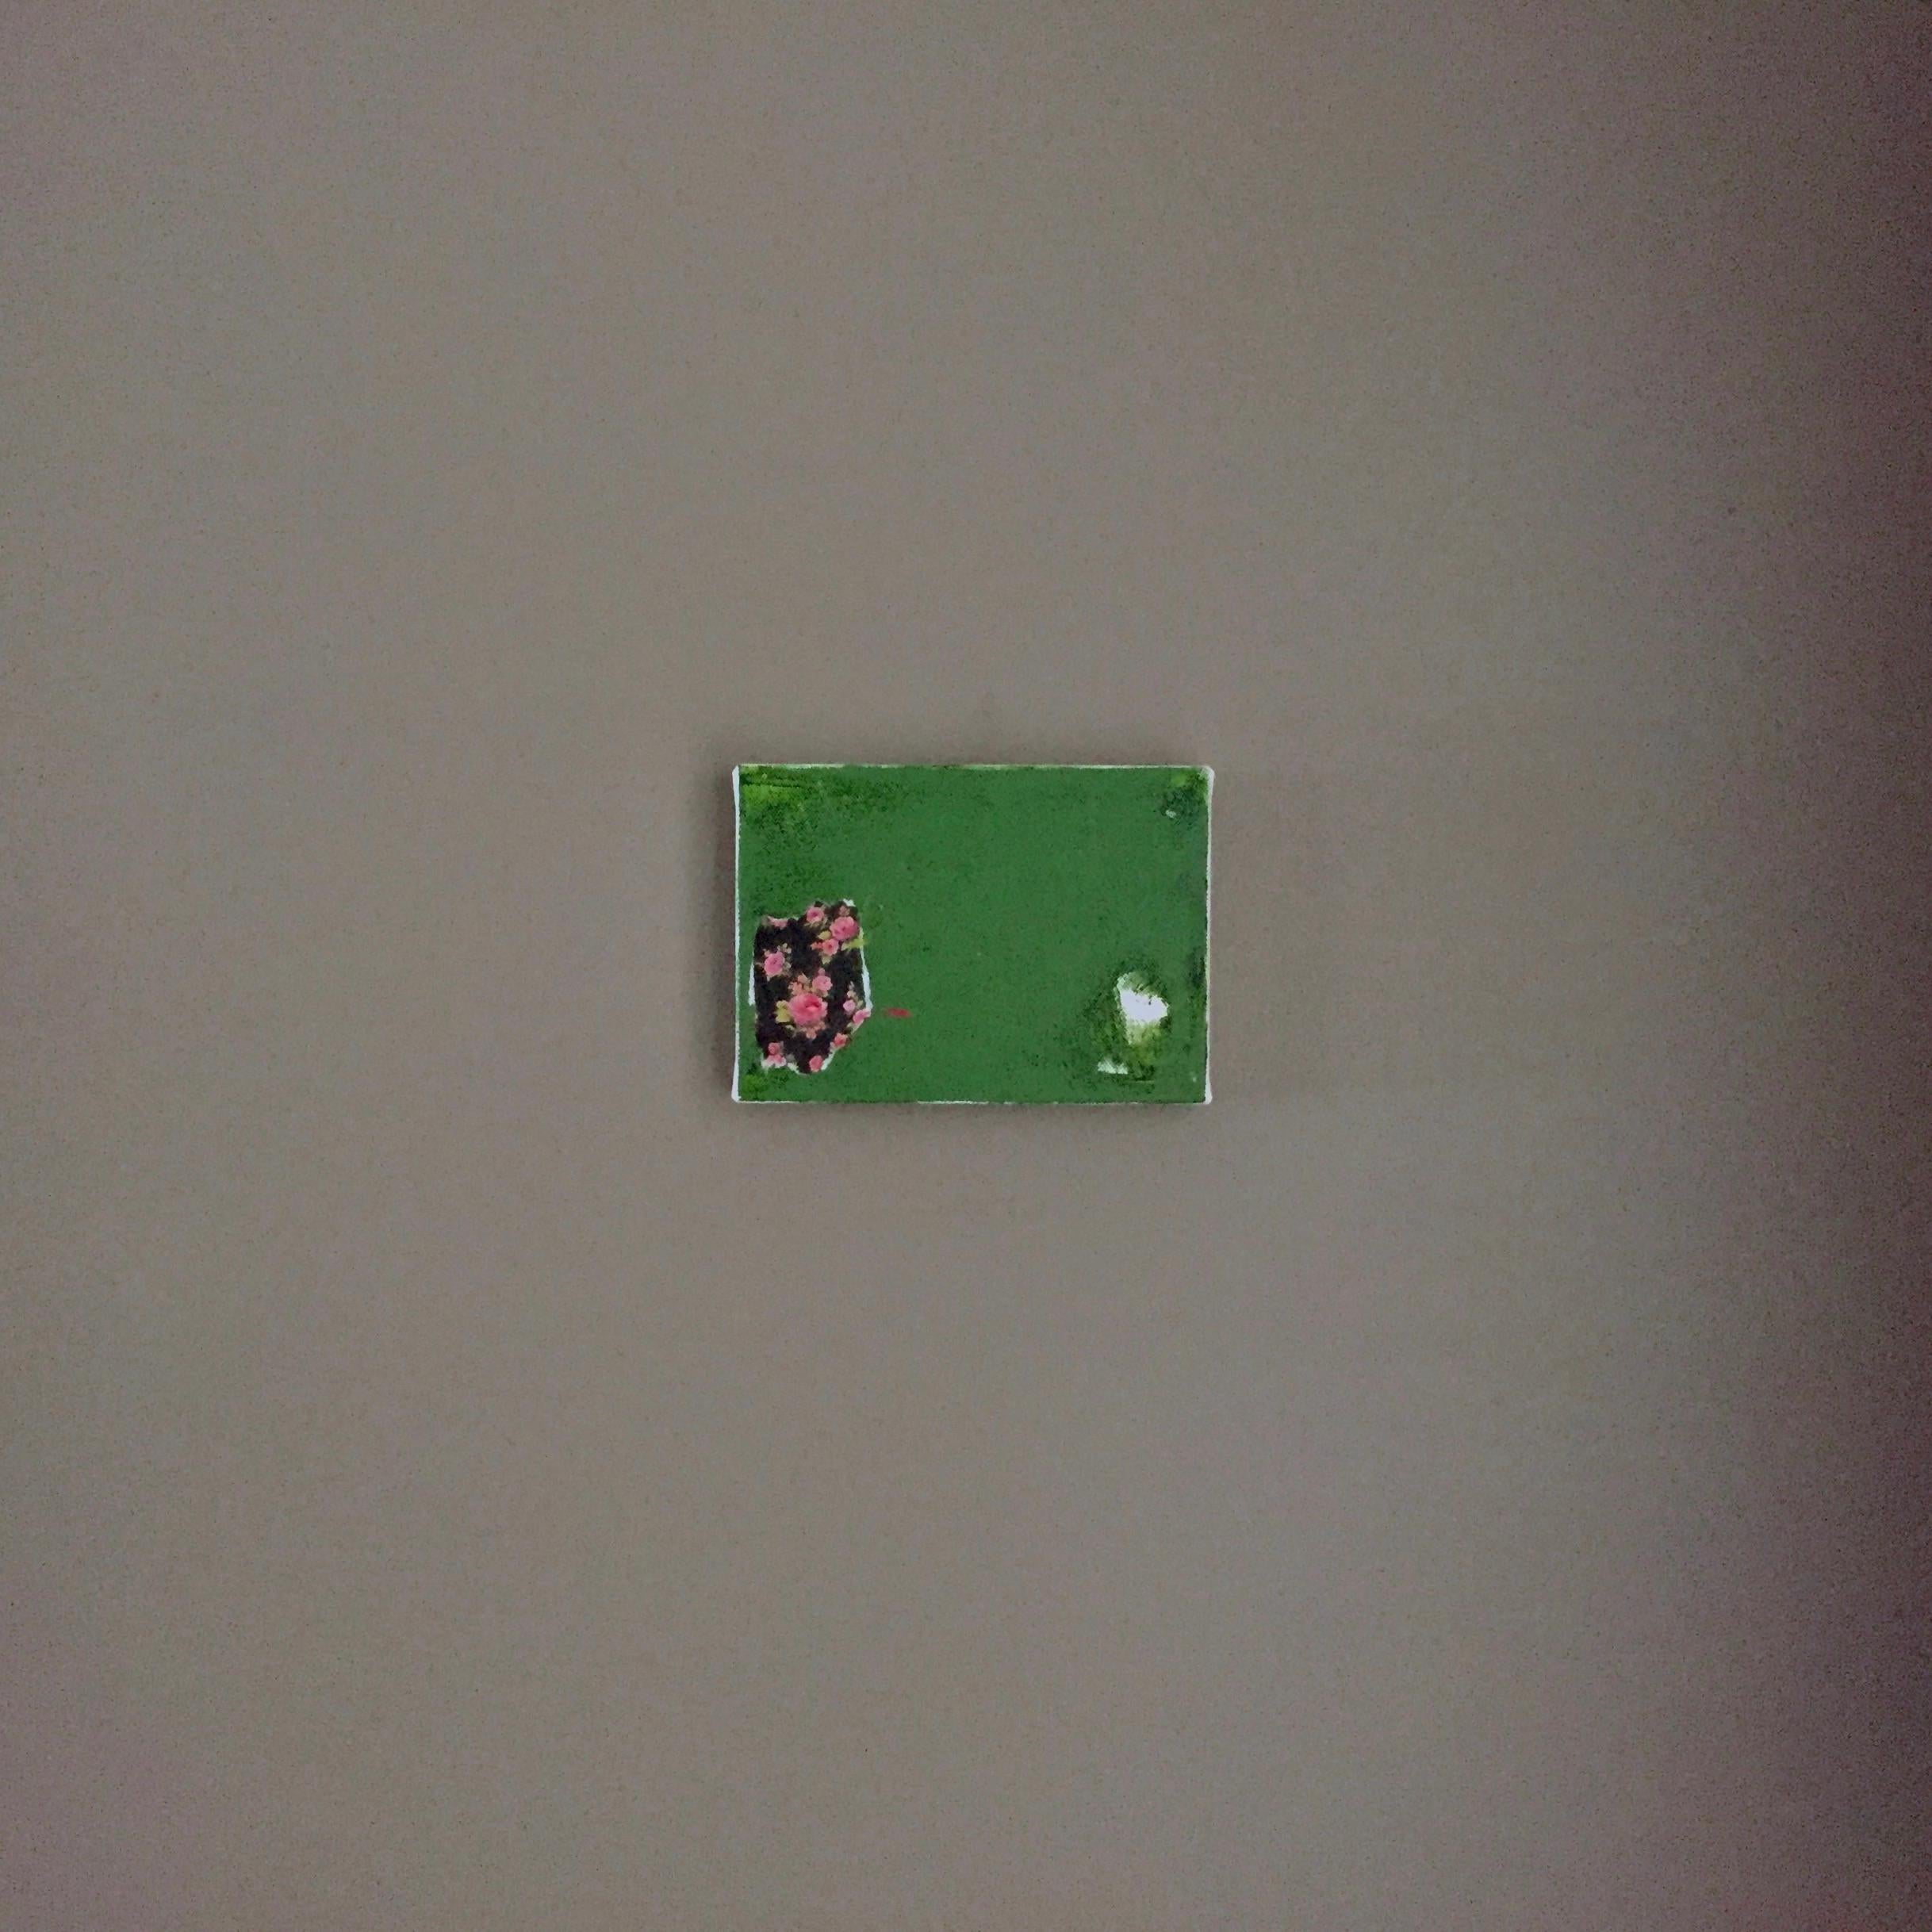 Wandblume (5 Zoll x 7 Zoll, grün, rosa, schwarz, weiß, florales abstraktes Gemälde) (Schwarz), Abstract Painting, von Andrea Stajan-Ferkul